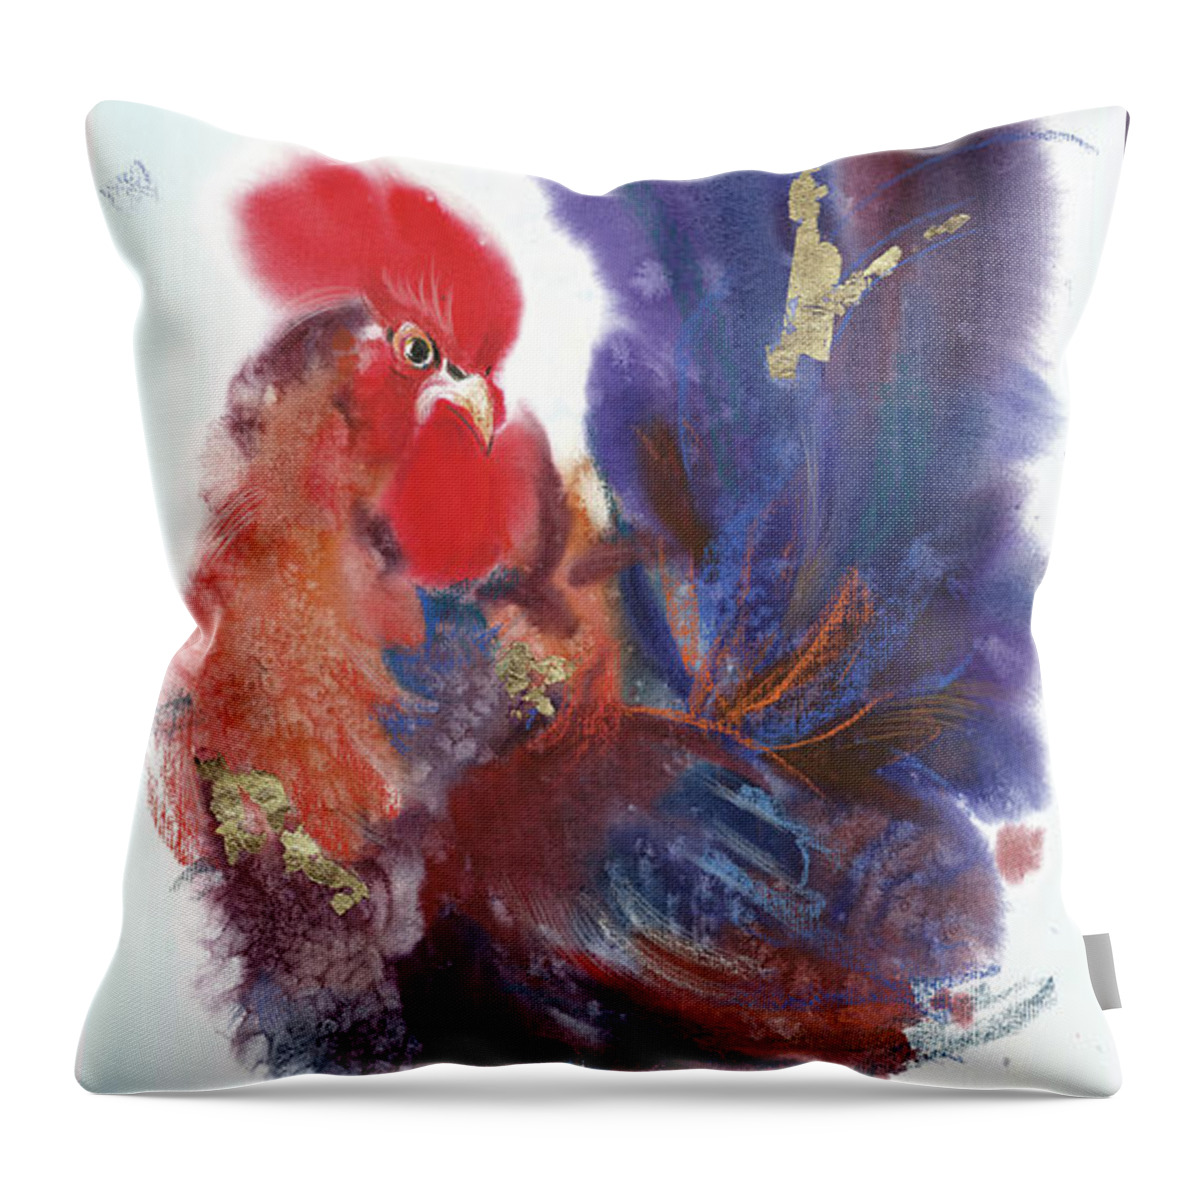 Watercolor Throw Pillow featuring the painting Sun Bird 4 by Tatyana Ponomareva